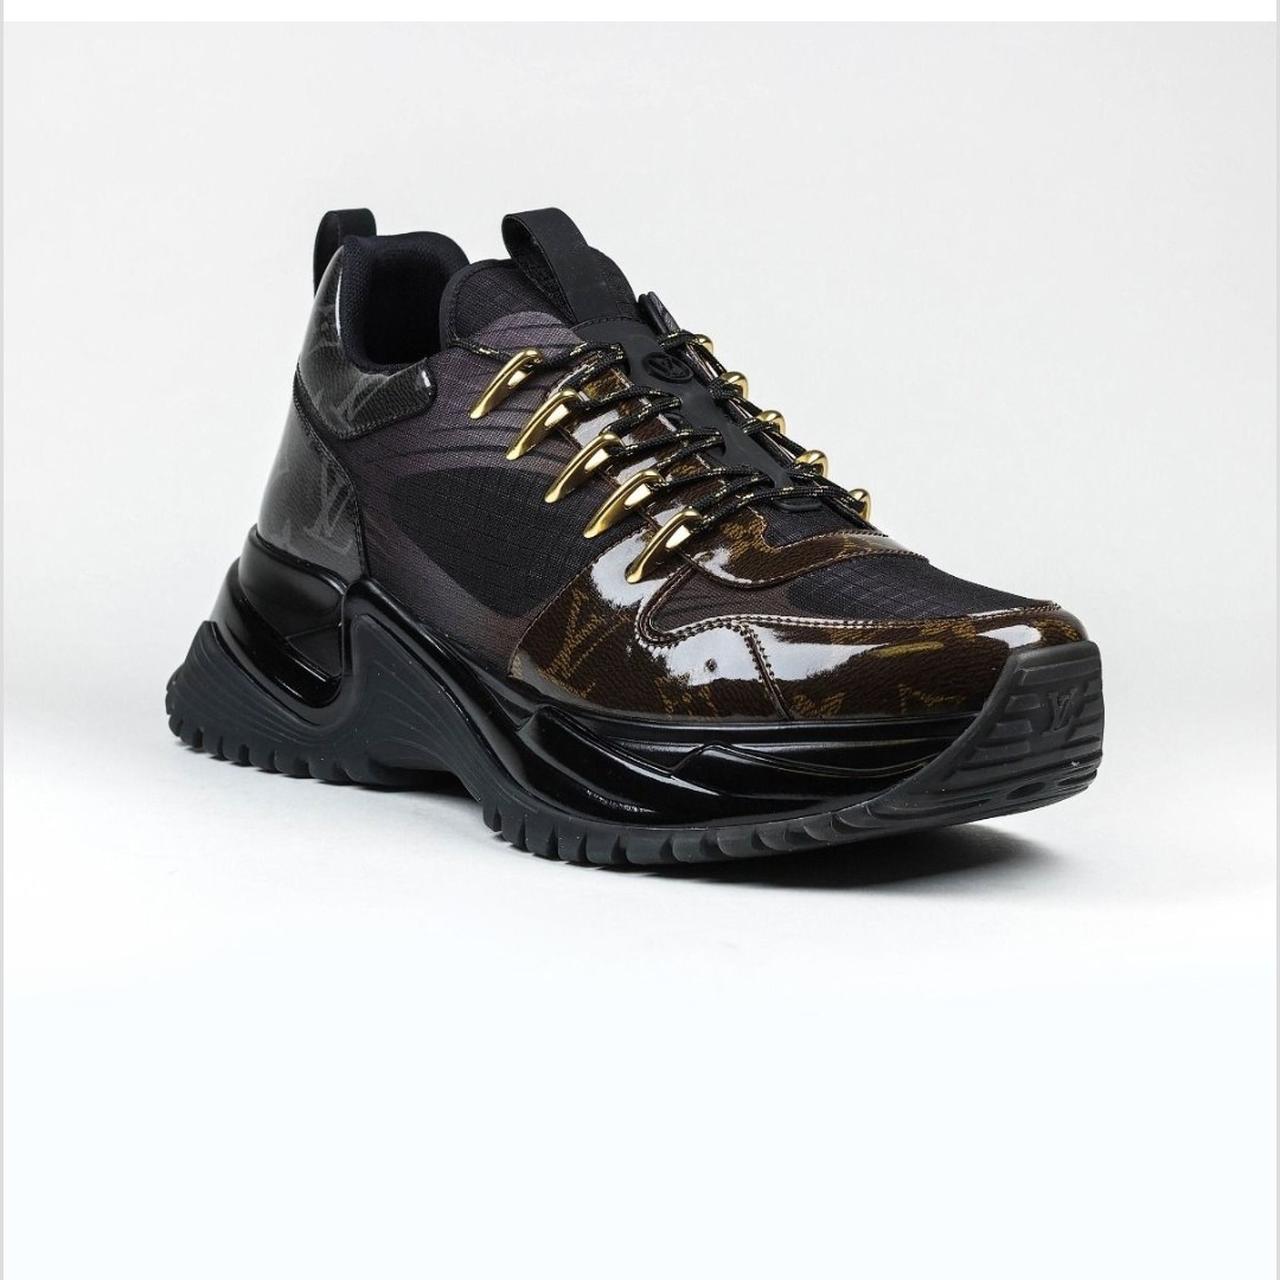 LV Trainer - Men's Luxury Fashion Sneakers